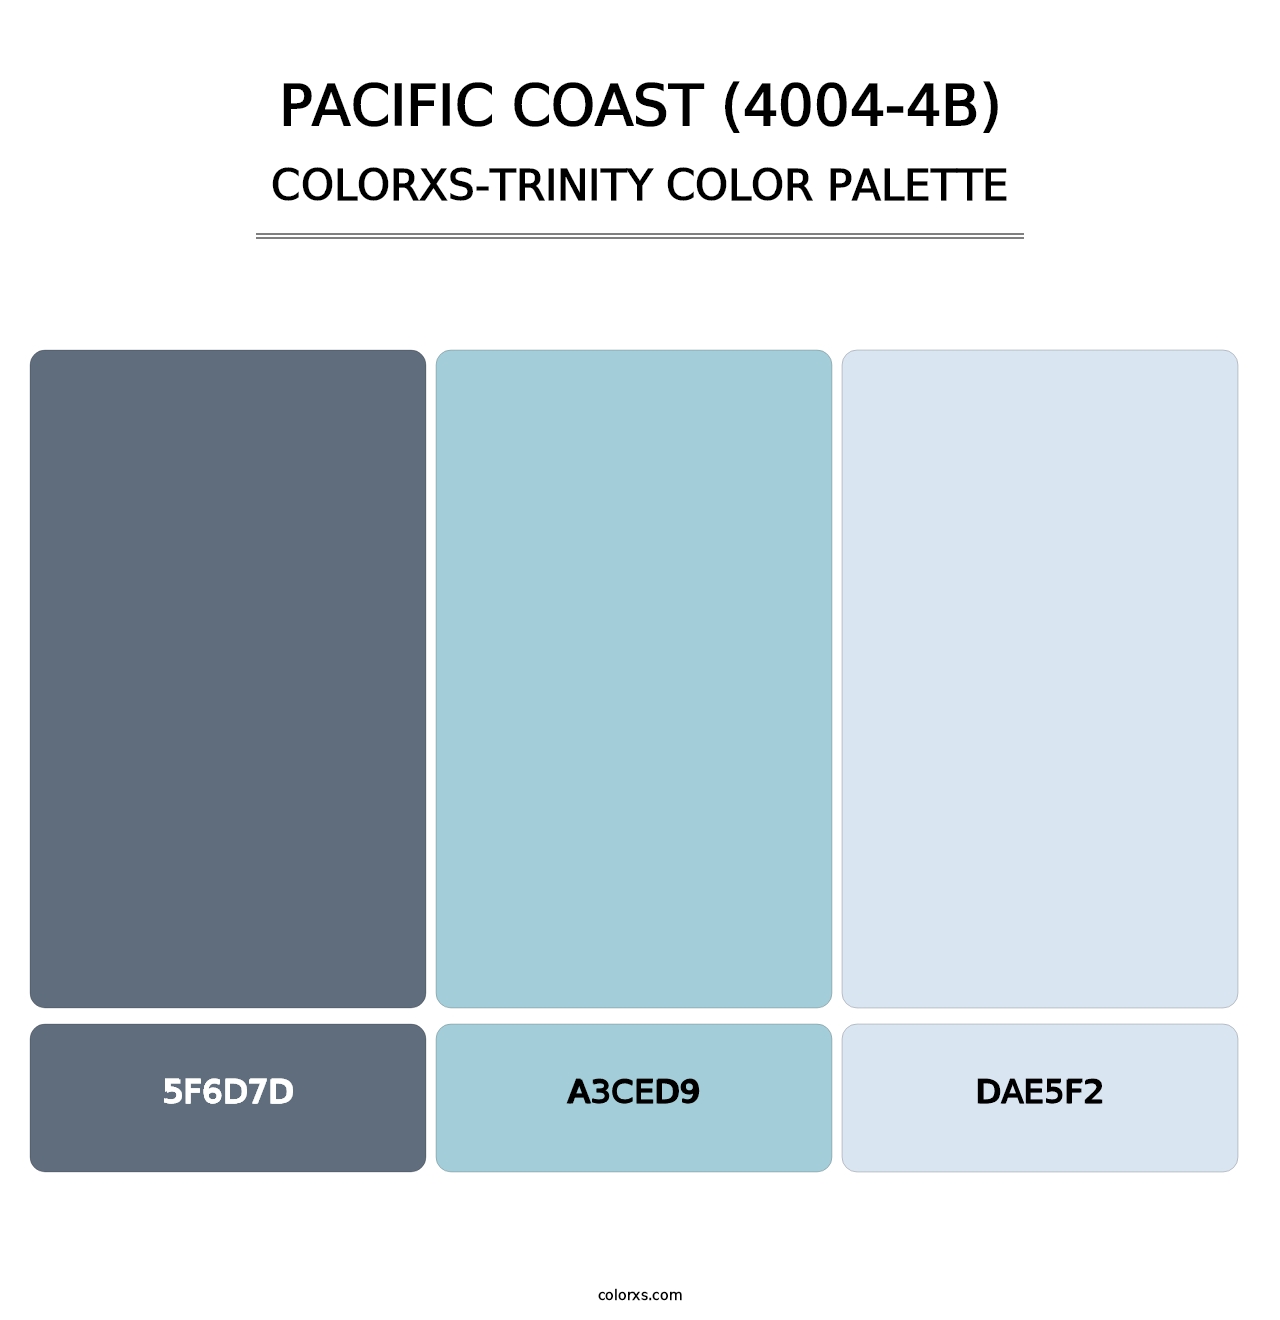 Pacific Coast (4004-4B) - Colorxs Trinity Palette